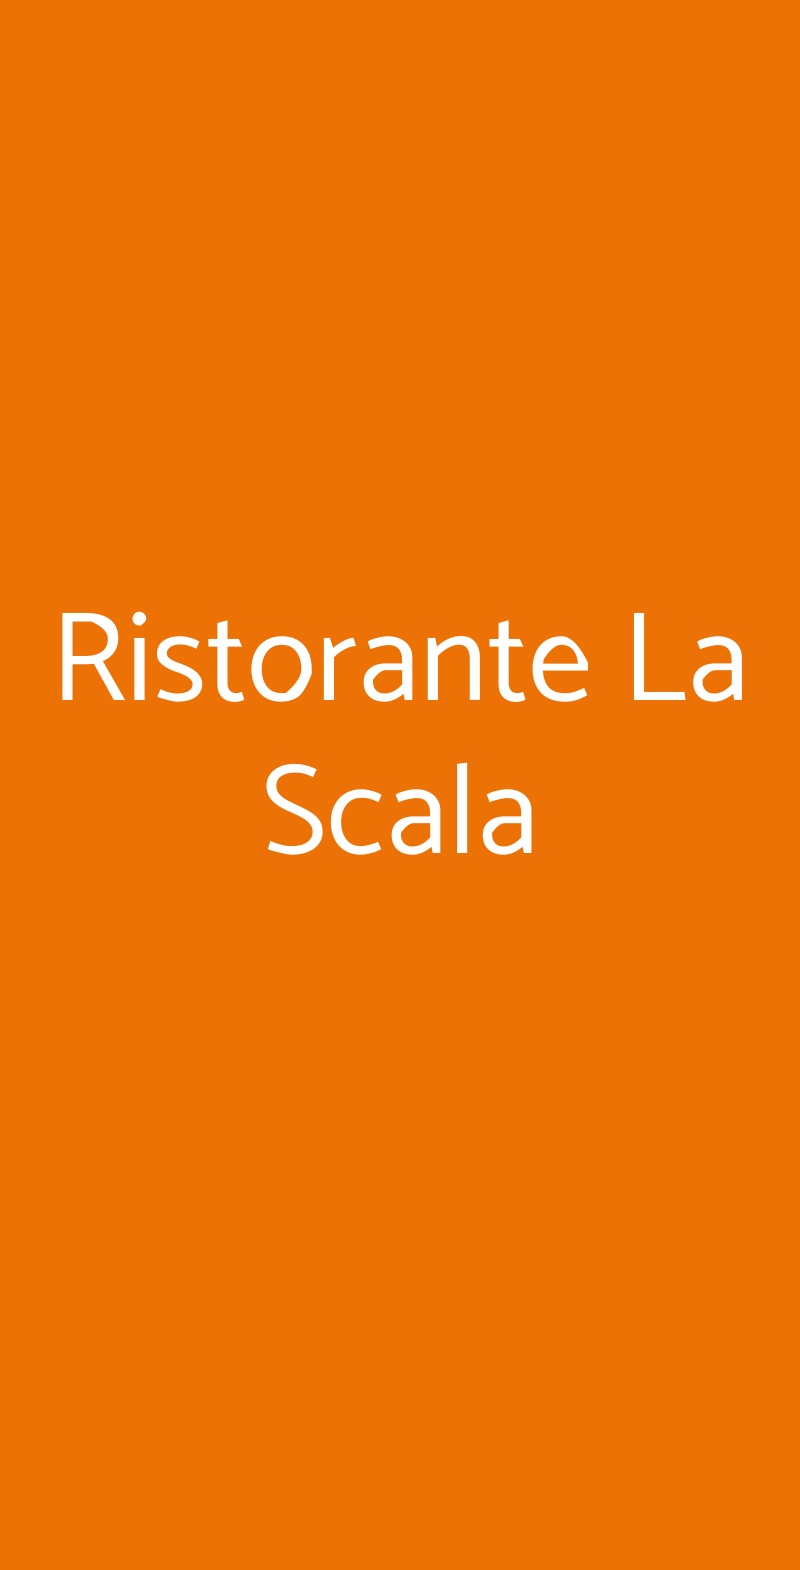 Ristorante La Scala Abano Terme menù 1 pagina